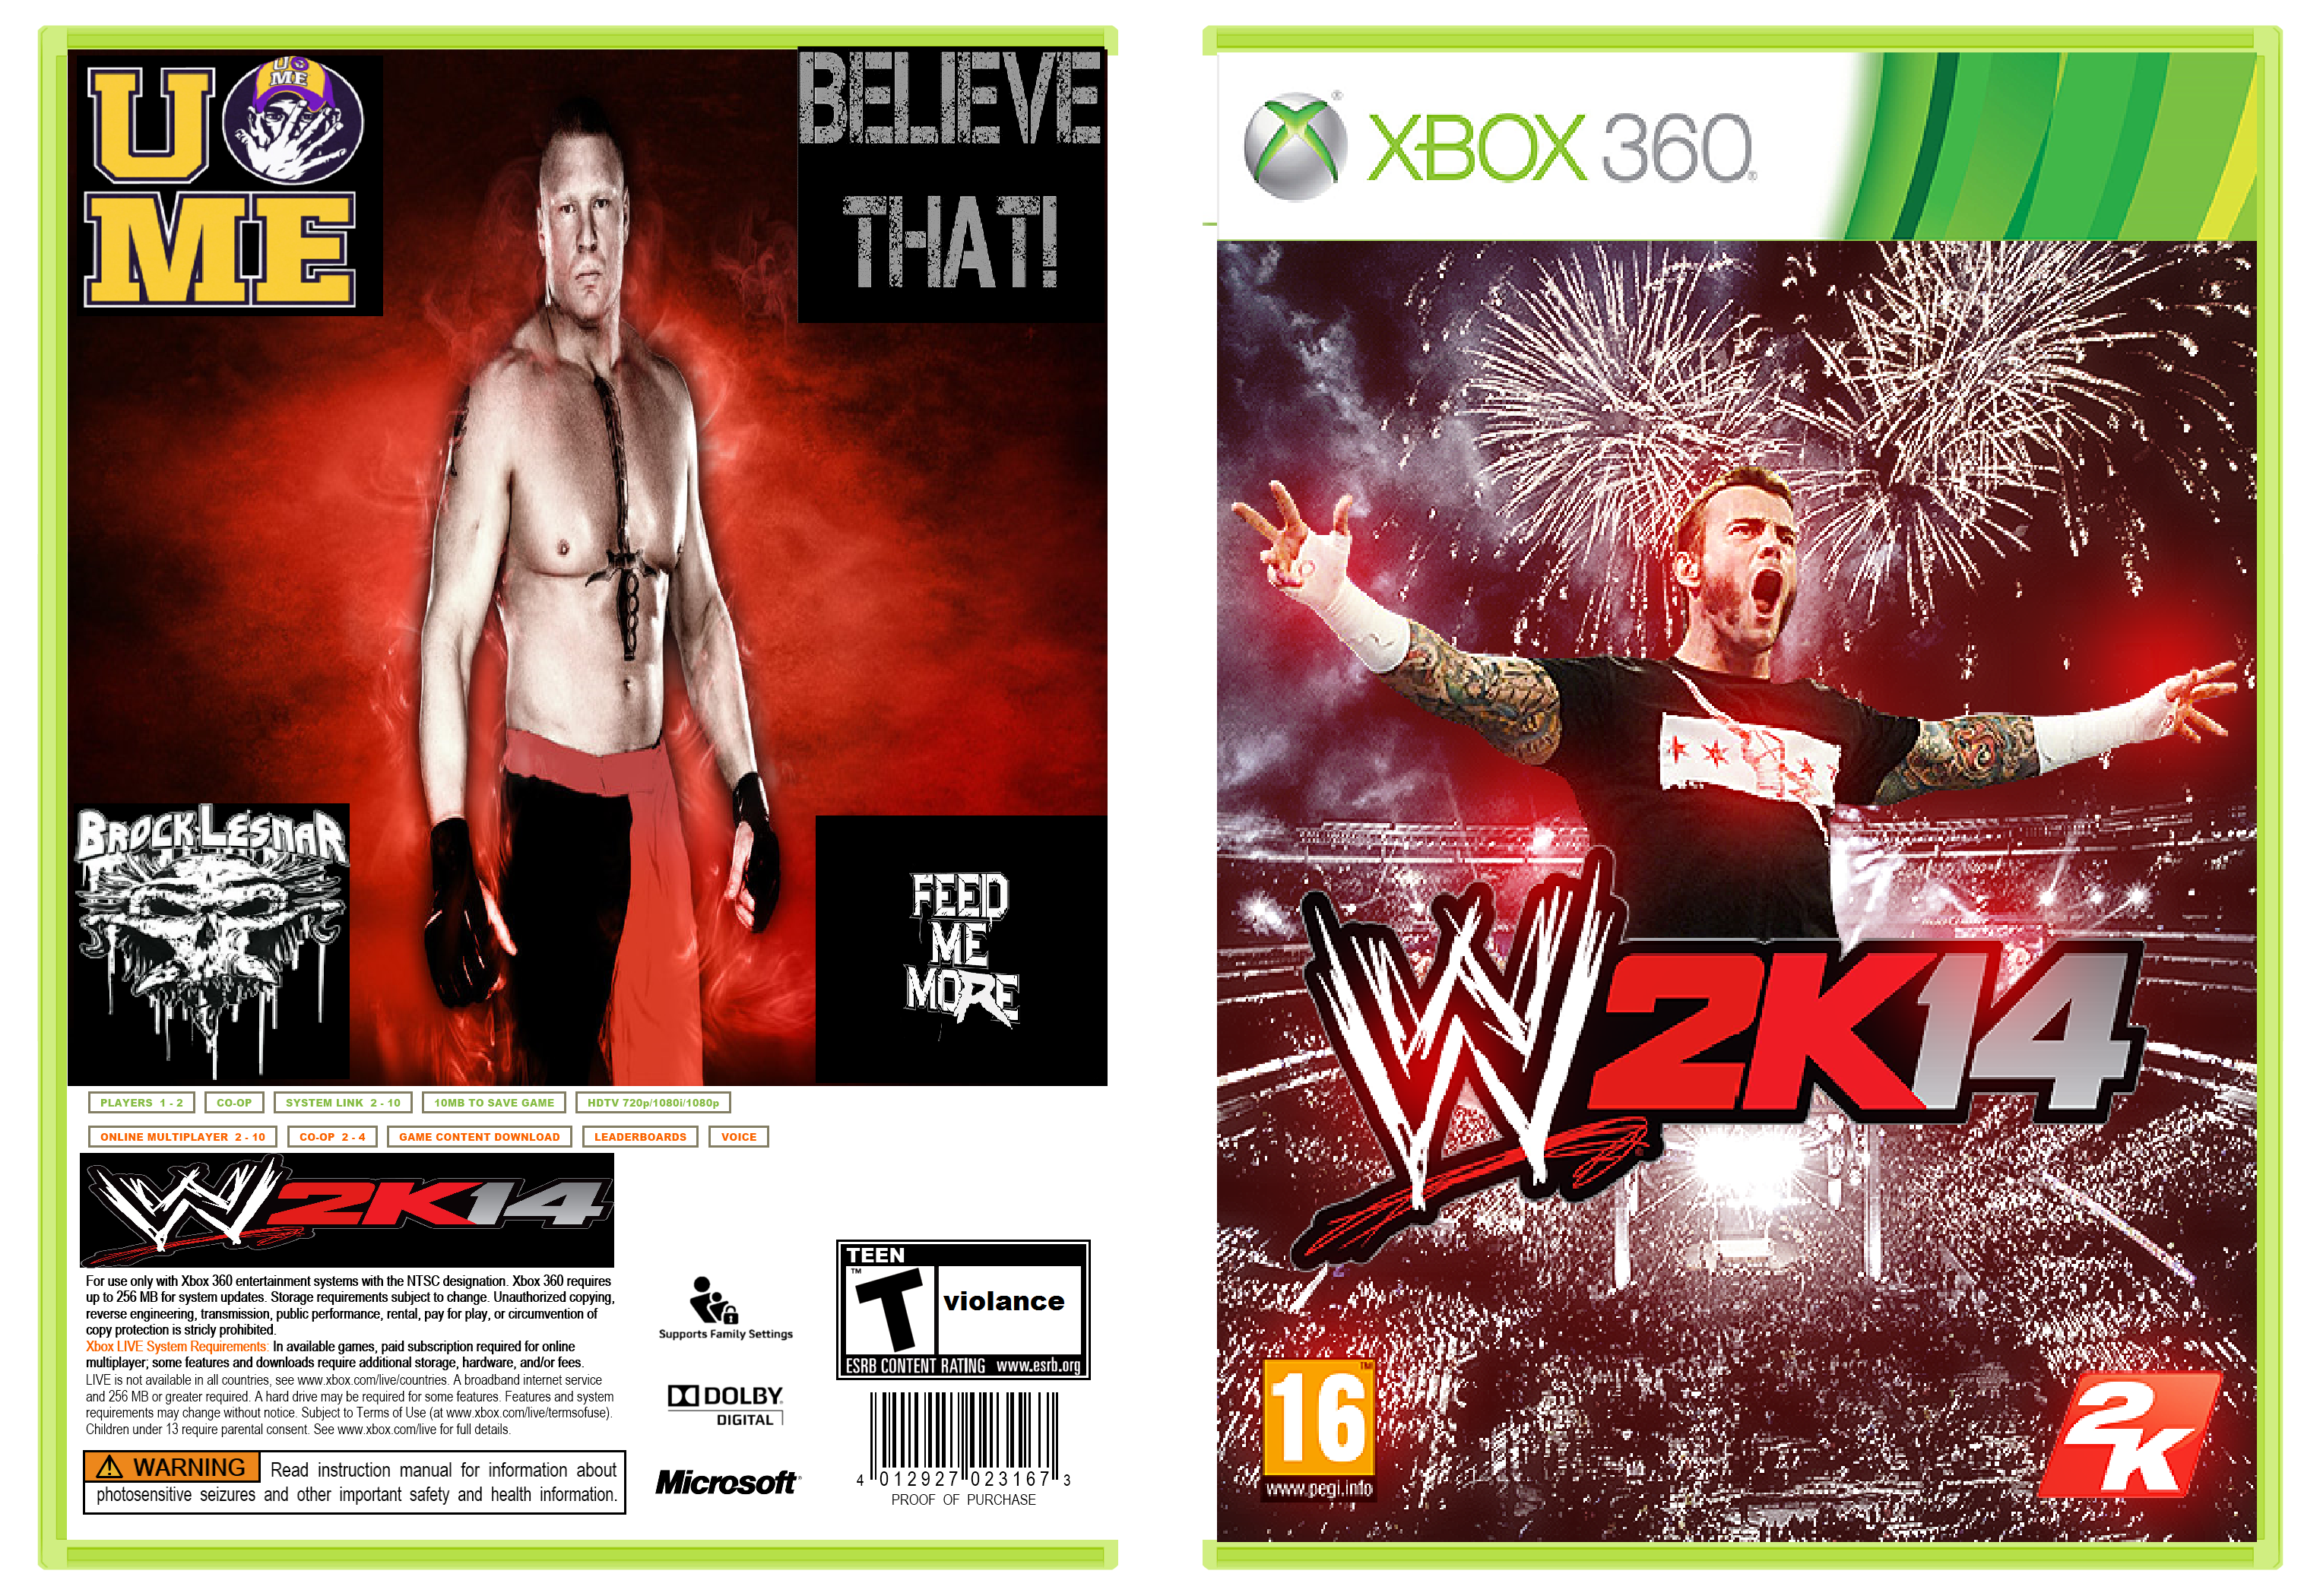 WWE2K14 box cover